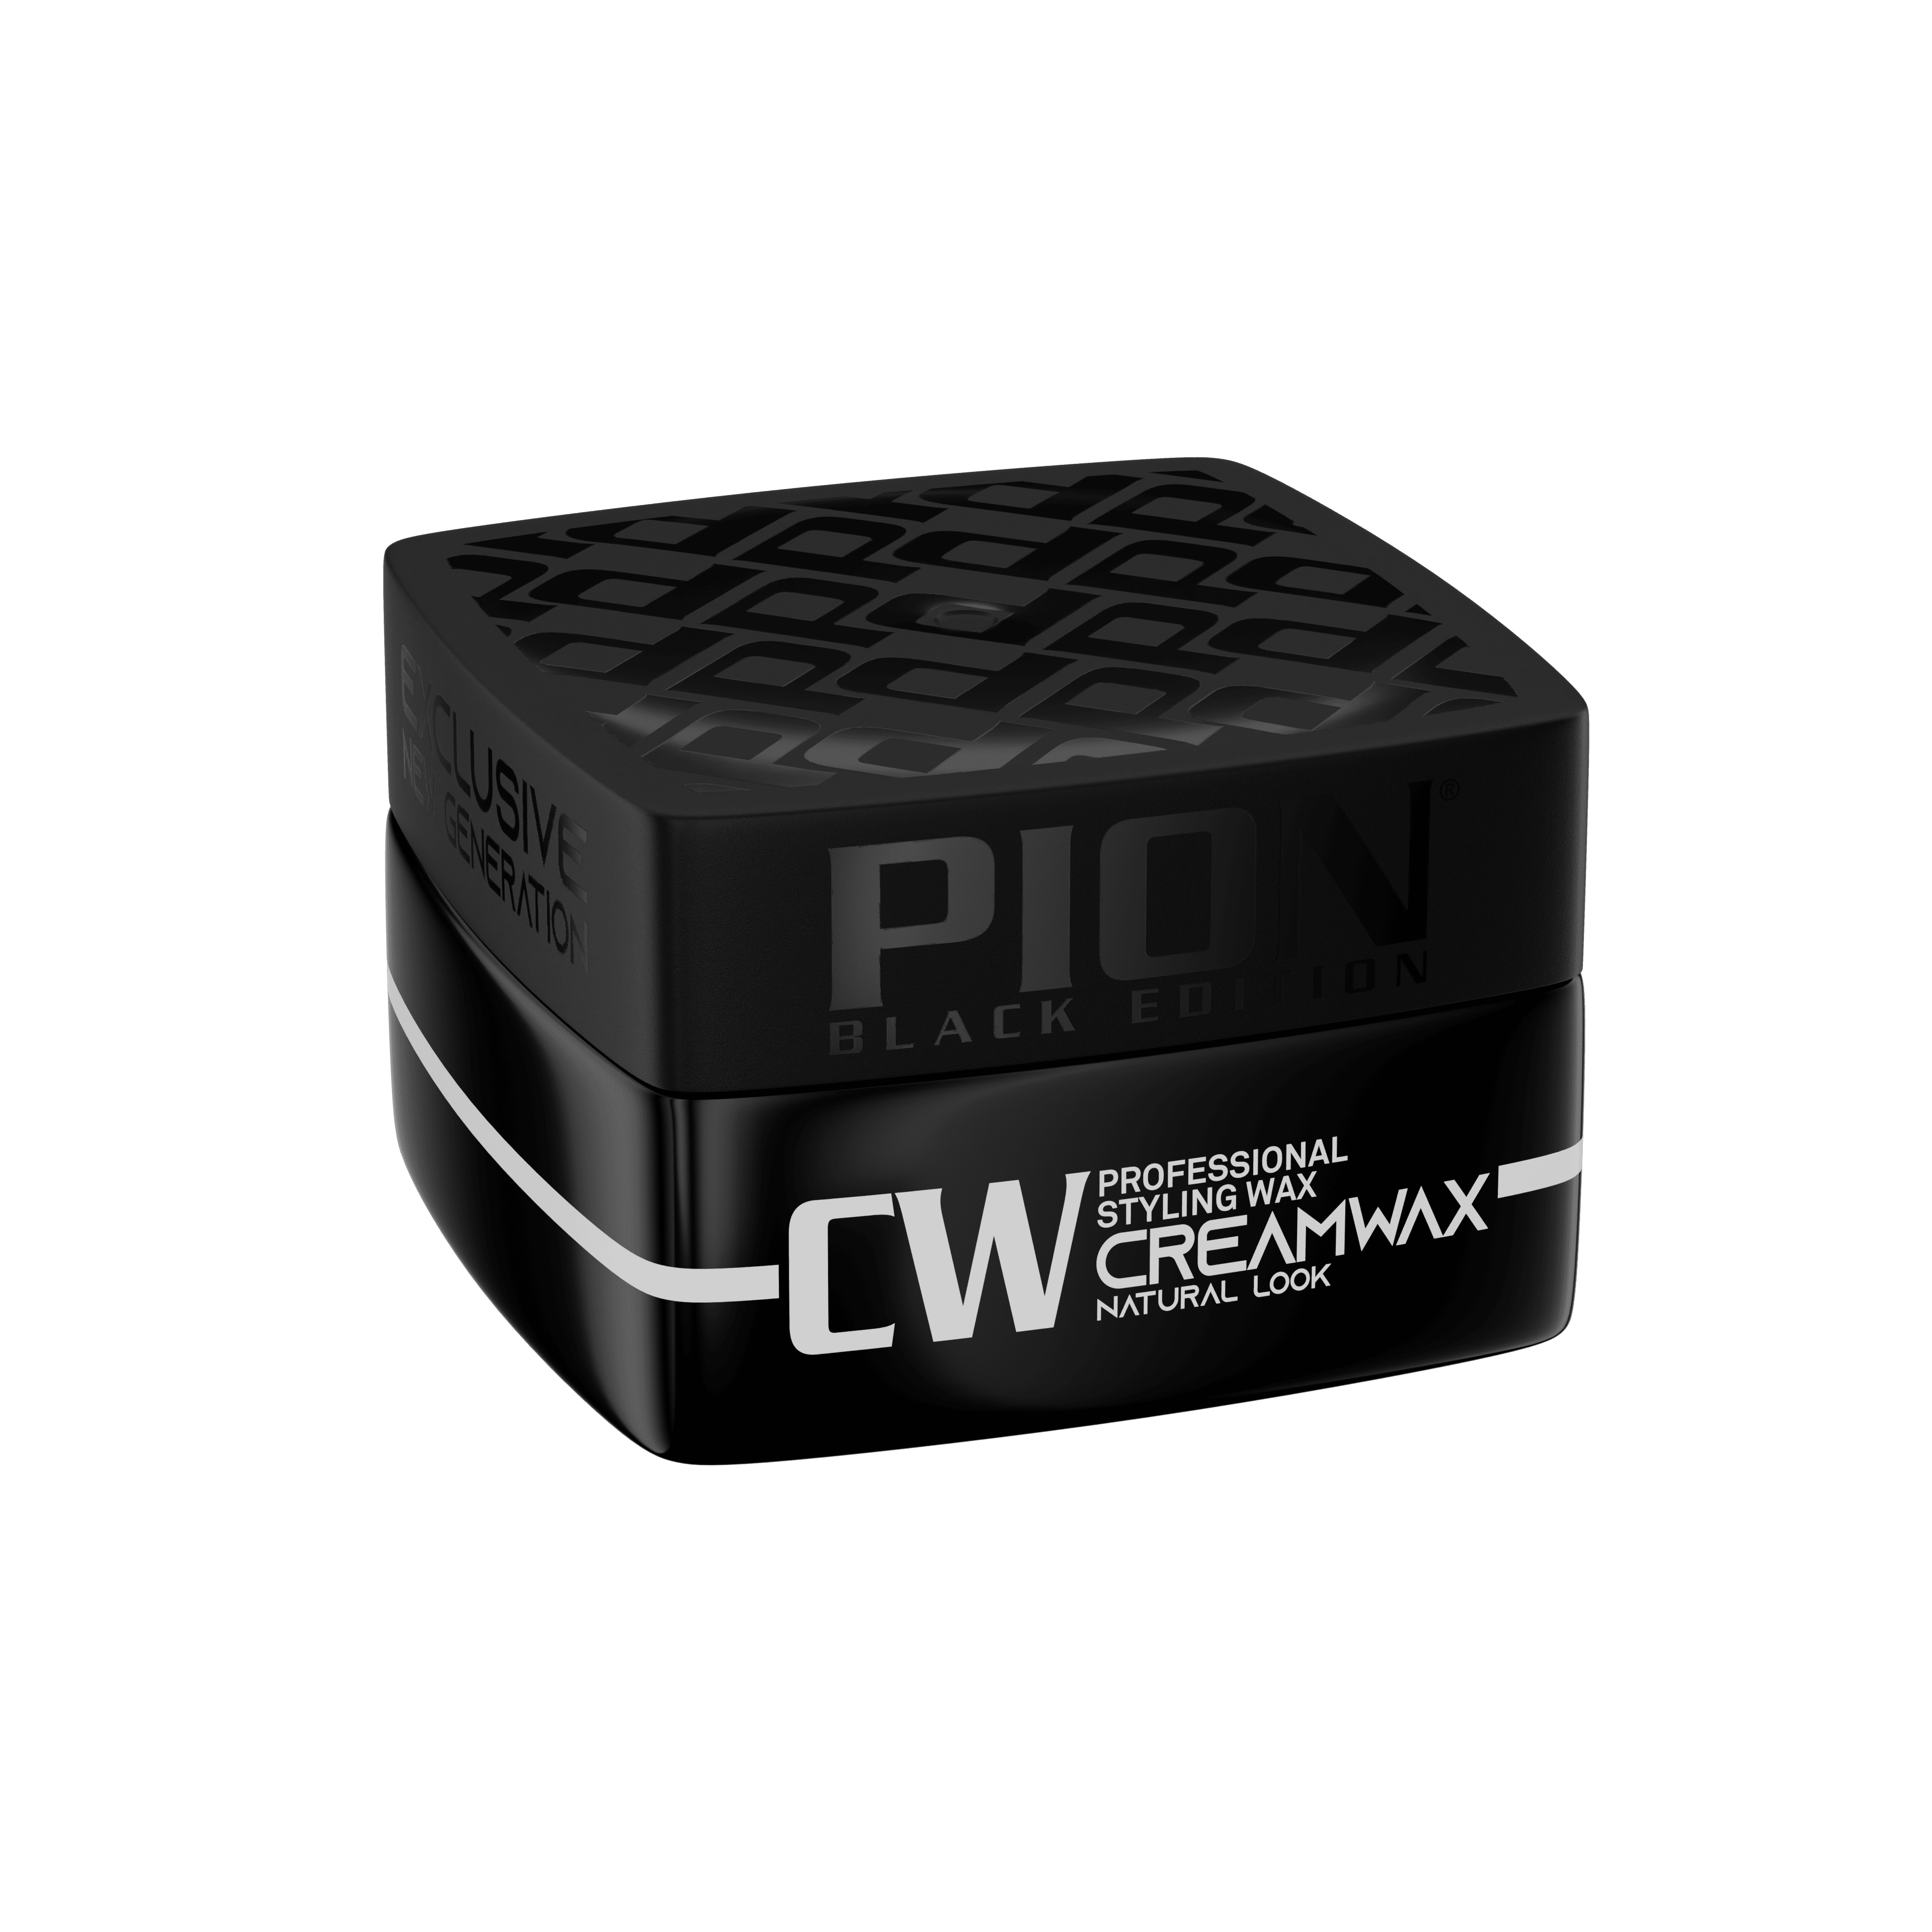 Pion Wax Creamwax - PION BLACK EDITION